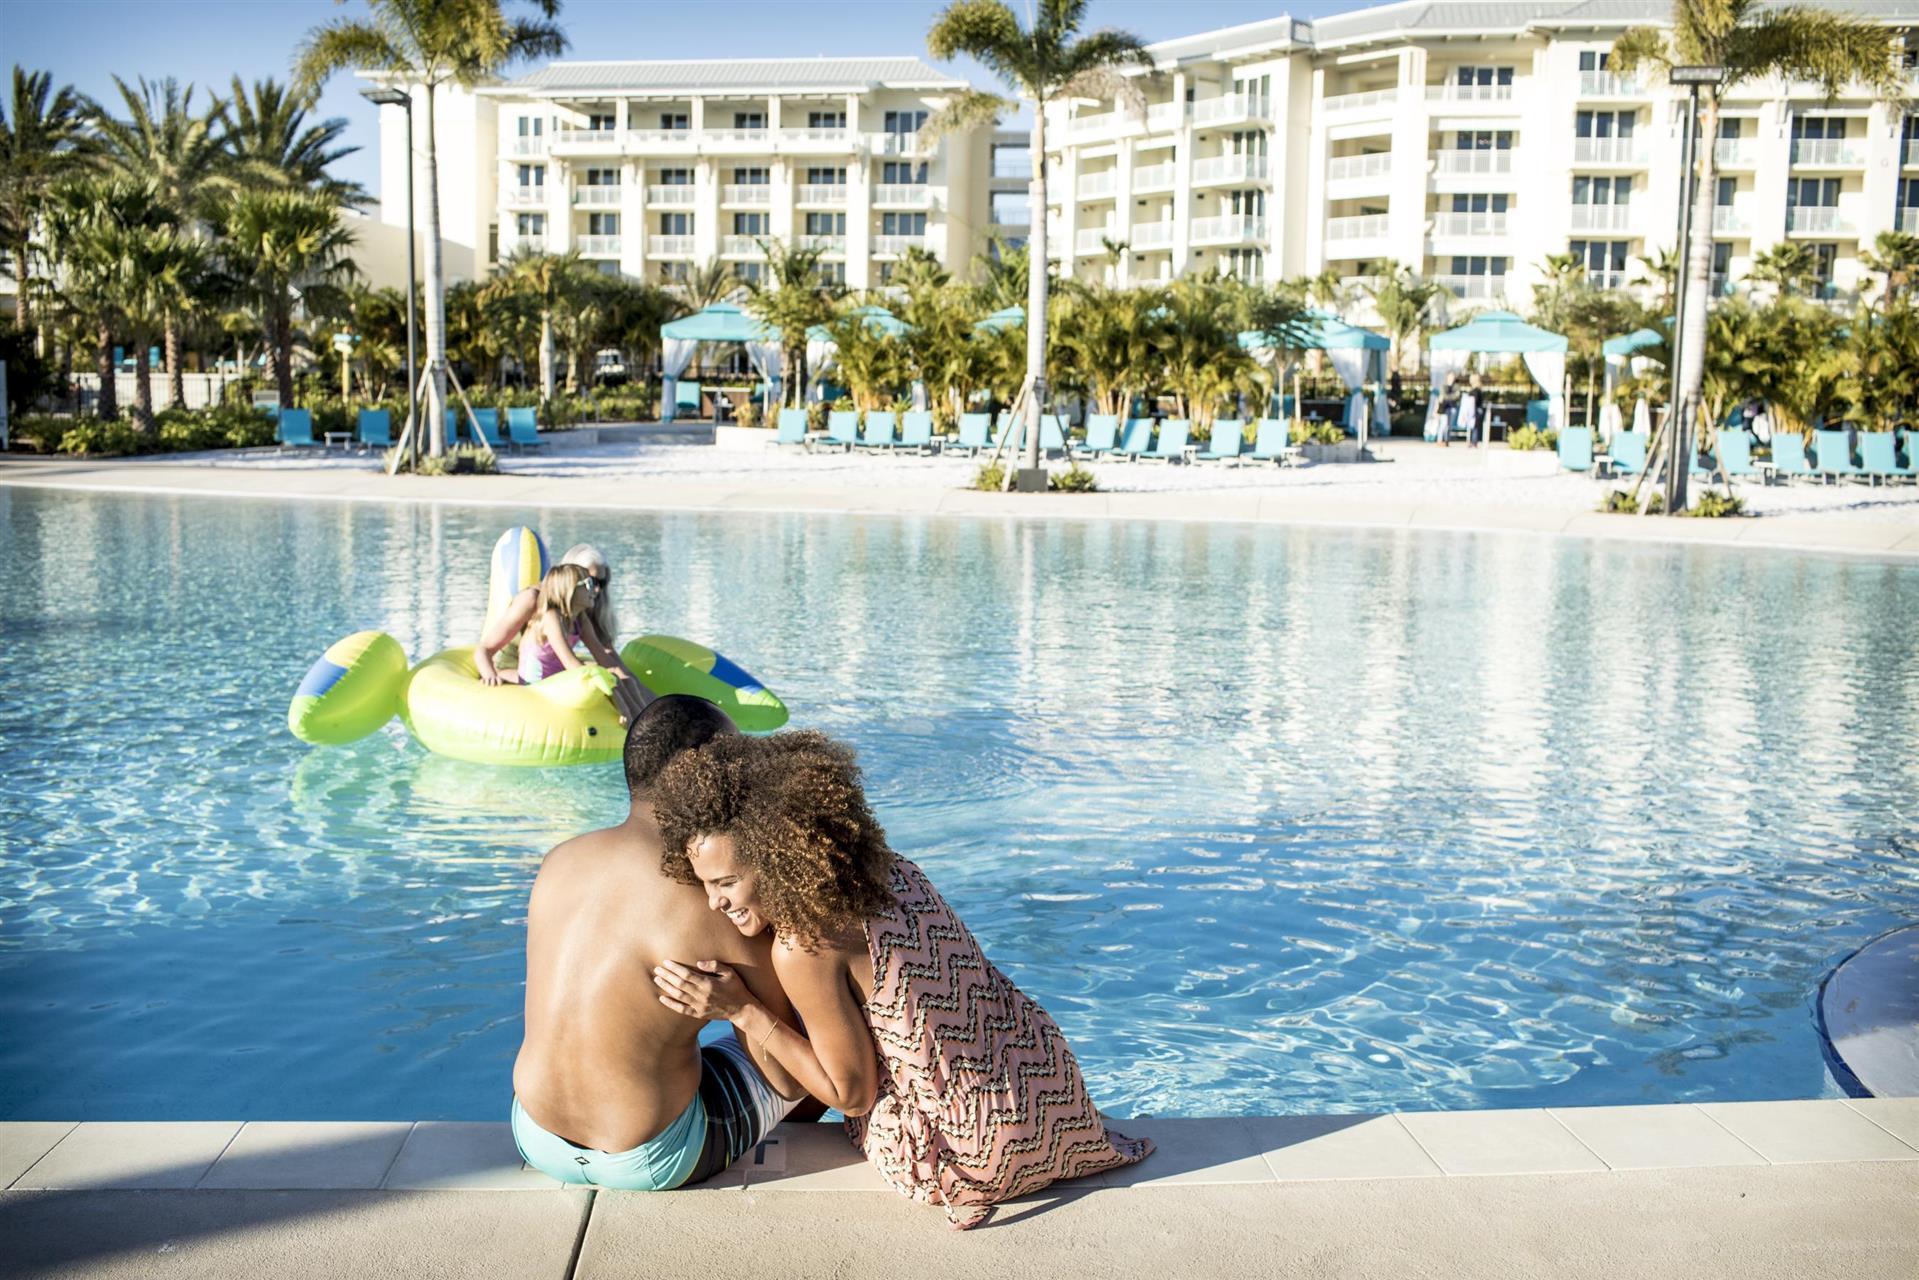 Margaritaville Resort Orlando and Cottages in Kissimmee, FL